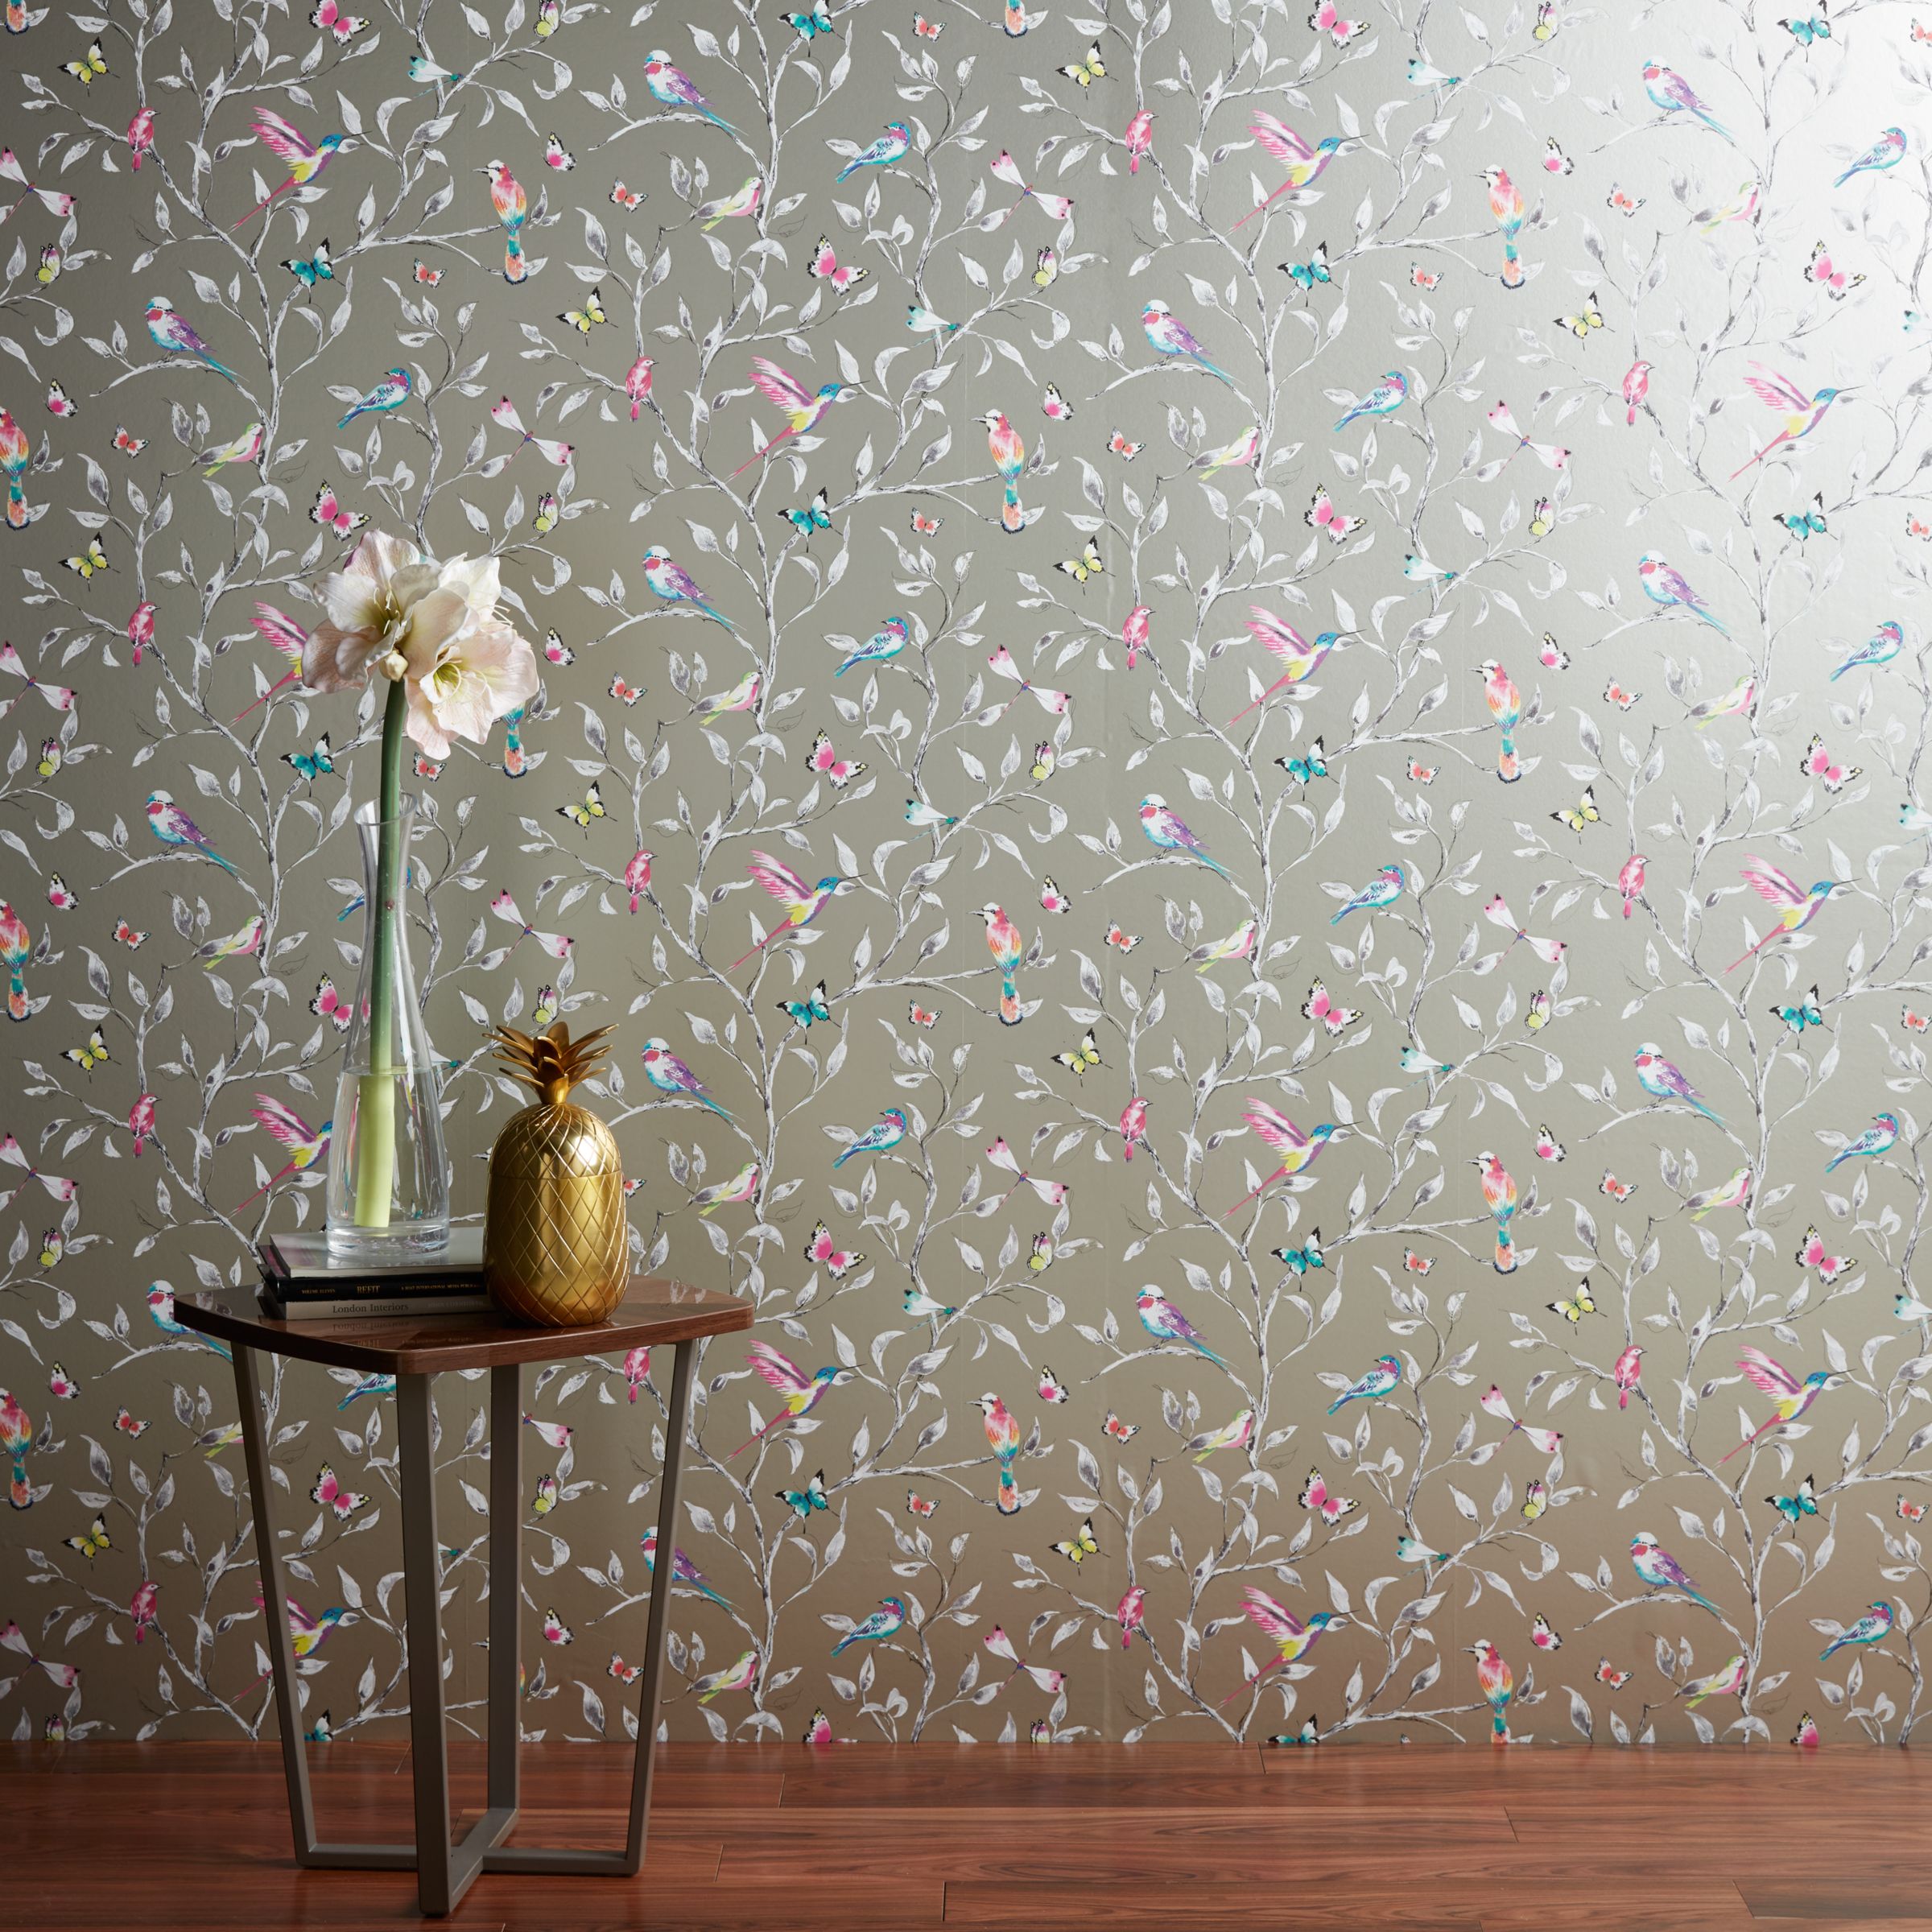 Find Living Room Wallpaper John Lewis Design Ideas Vermicelli